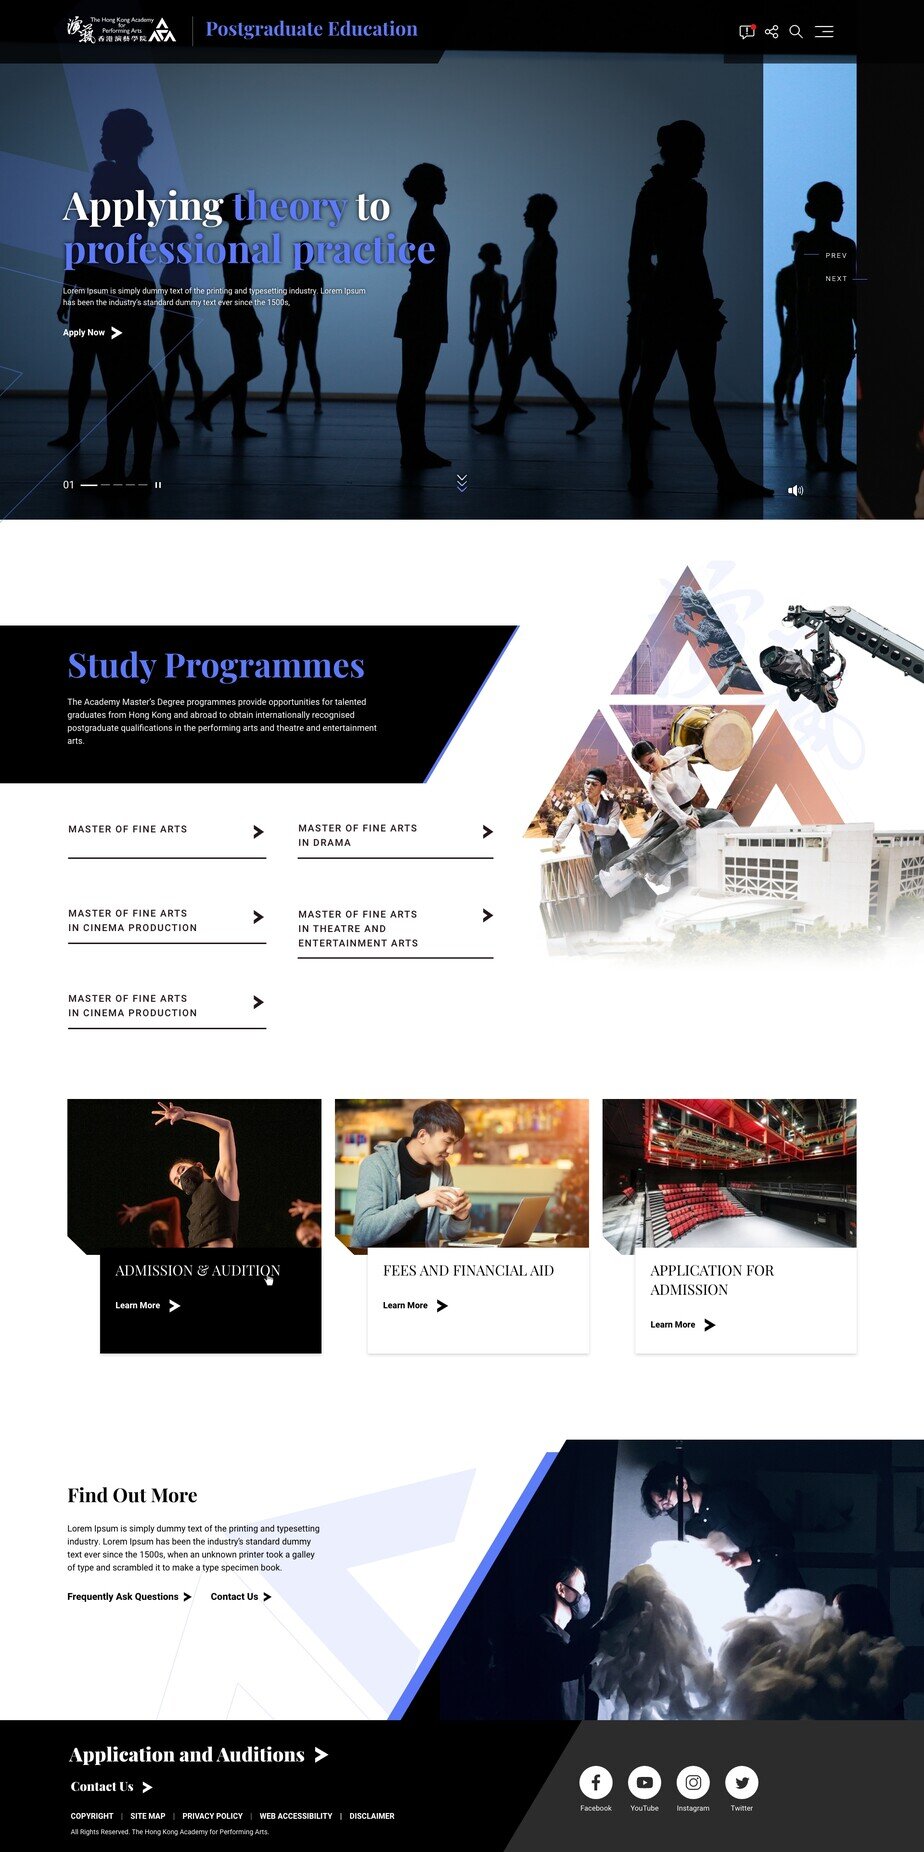 Hong Kong Academy for Performing Arts website screenshot for desktop version 6 of 7